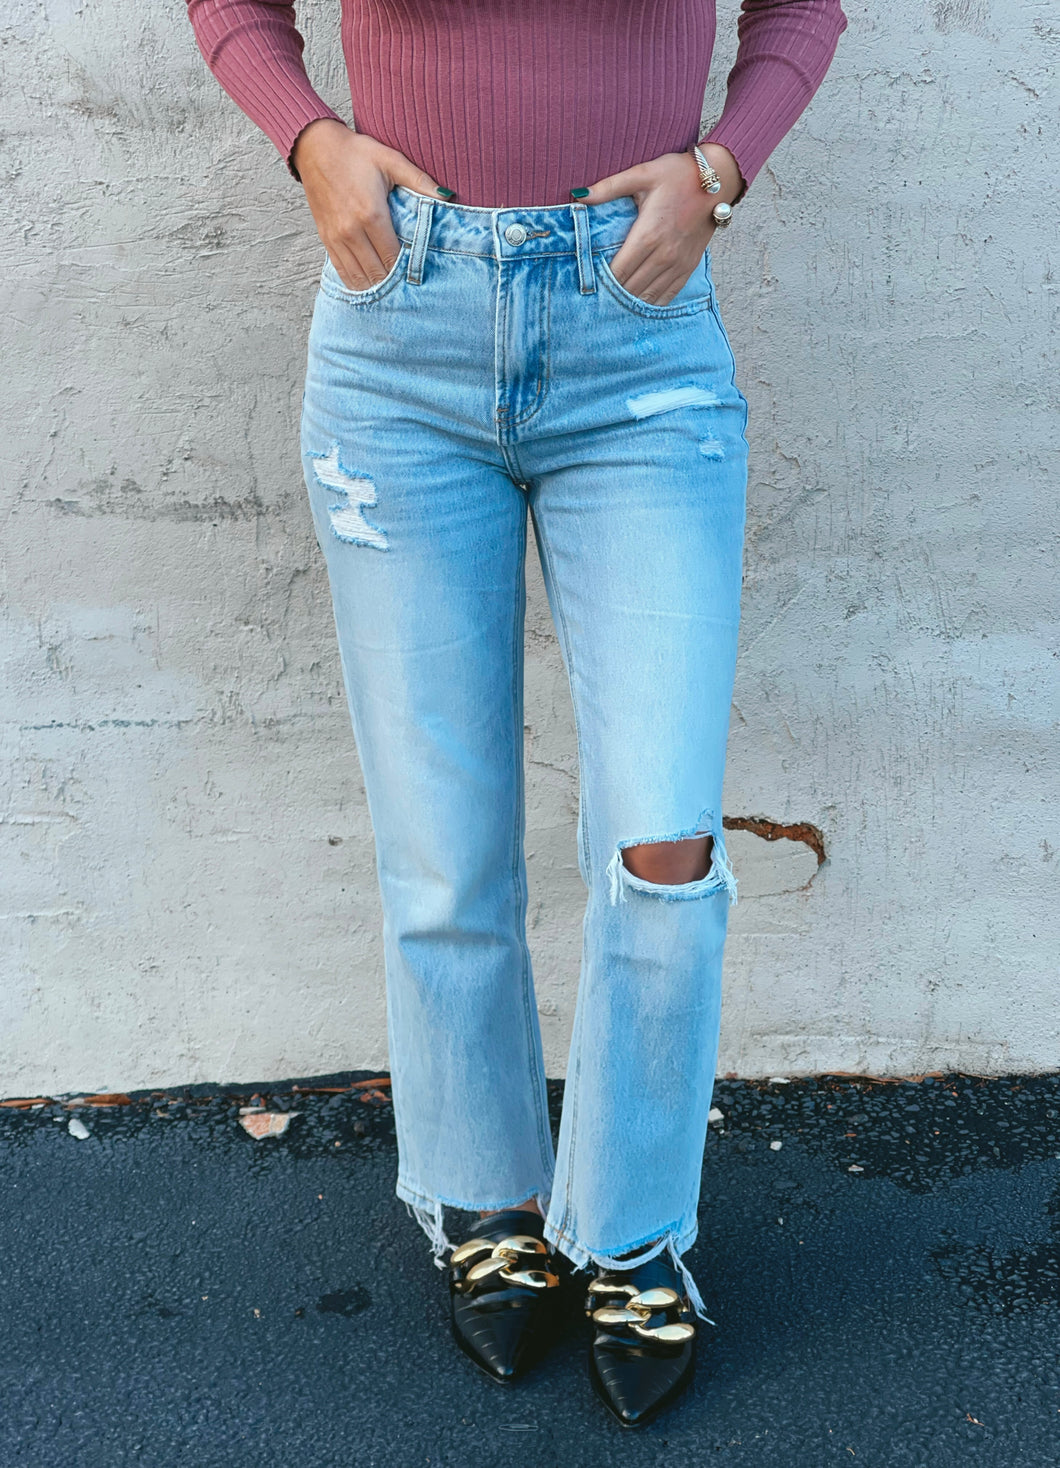 Vintage Distressed Crop Jeans - 1 Size 29 Left!